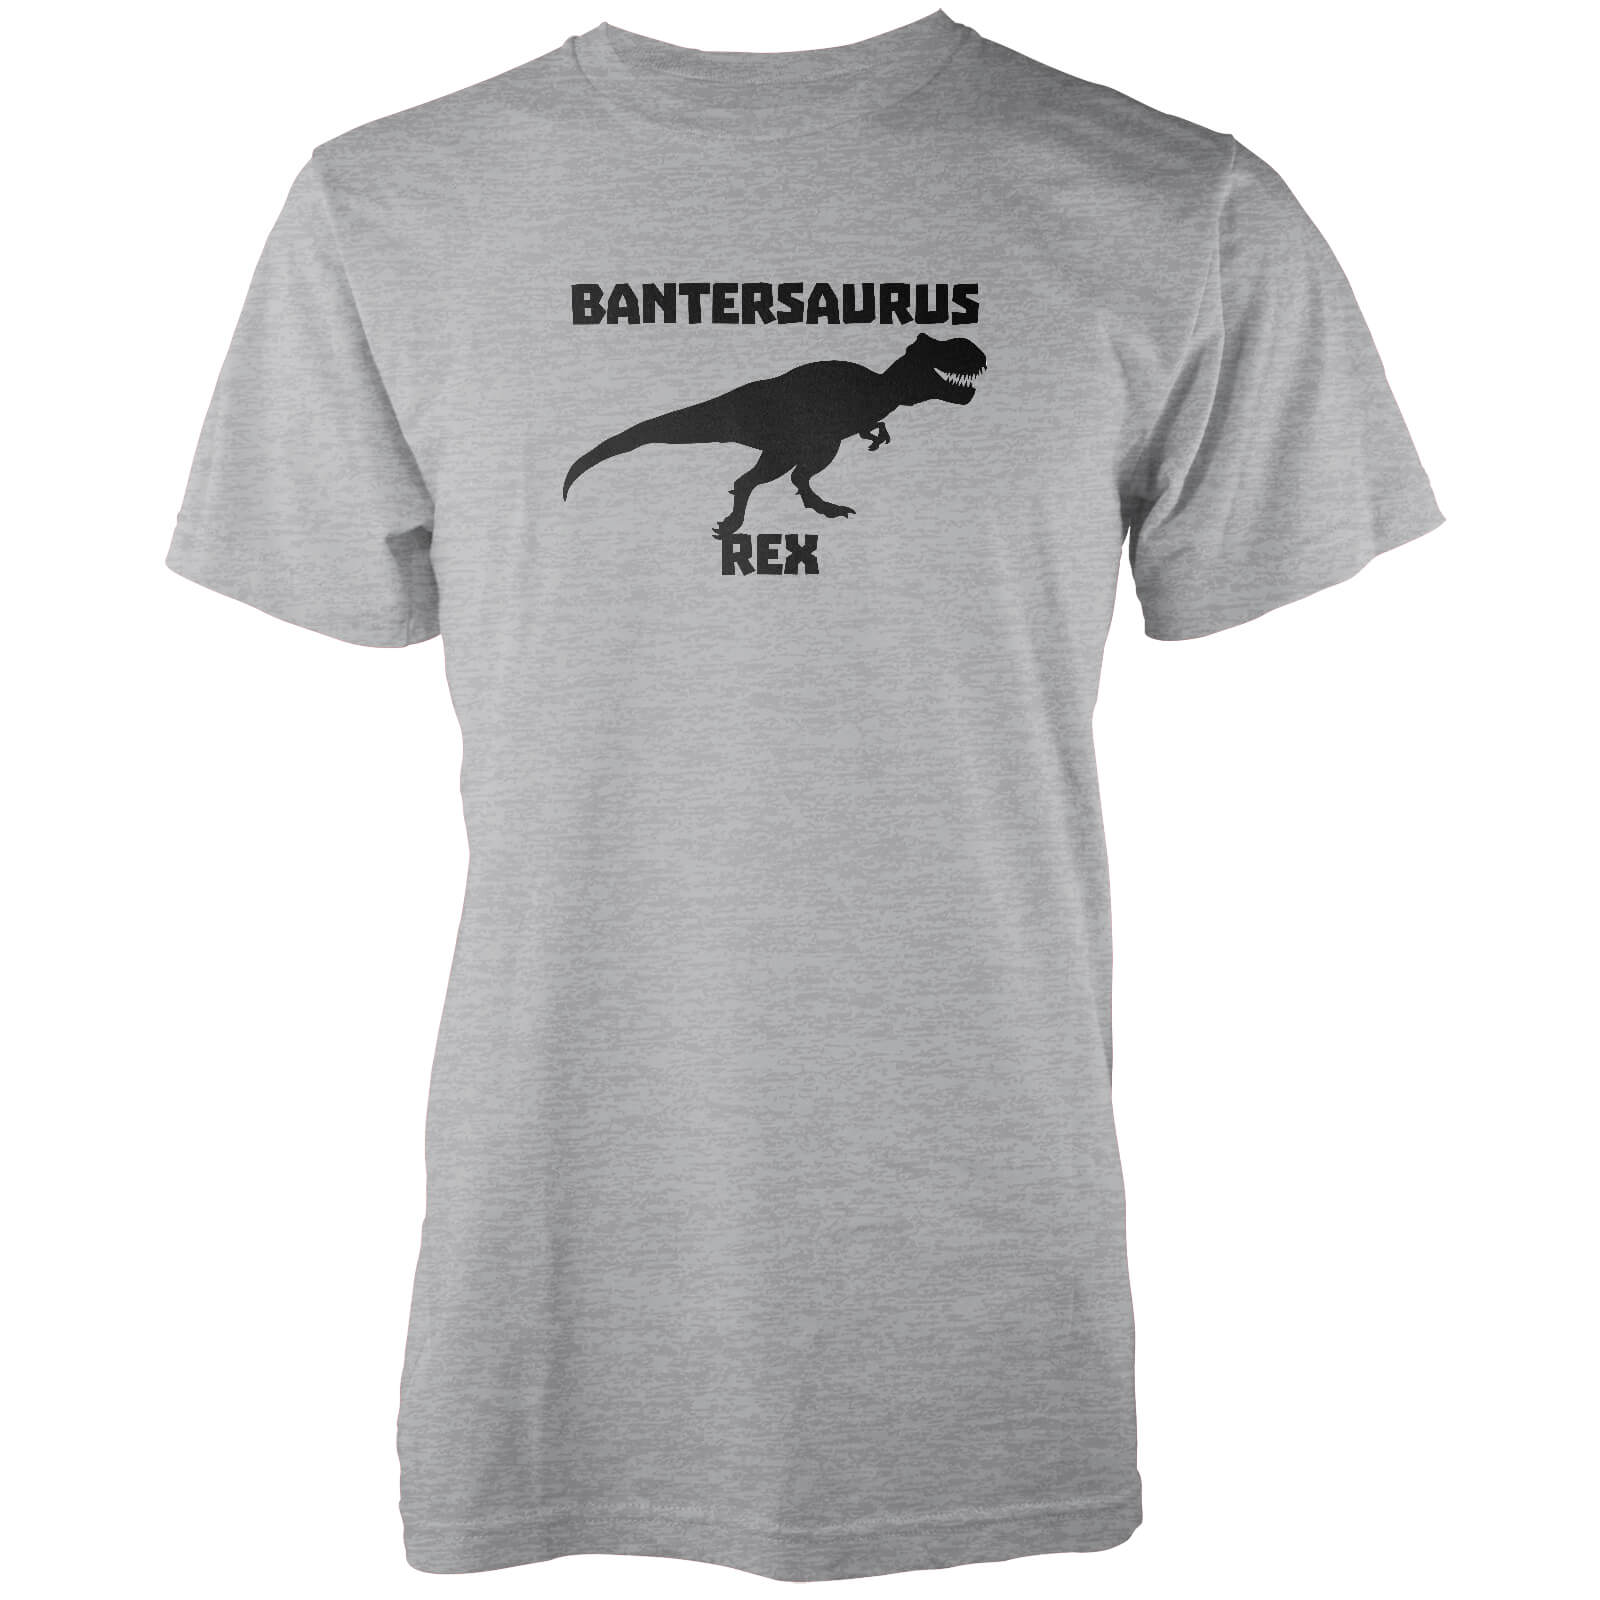 Bantersaurus Rex Grey T-Shirt - S - Grey